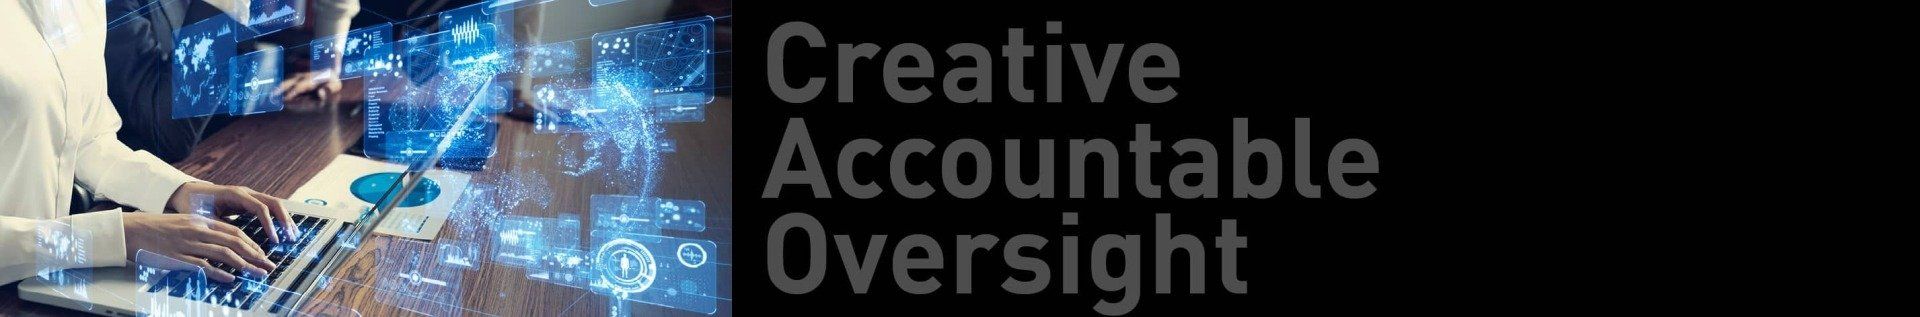 Creative Accountable Oversight banner